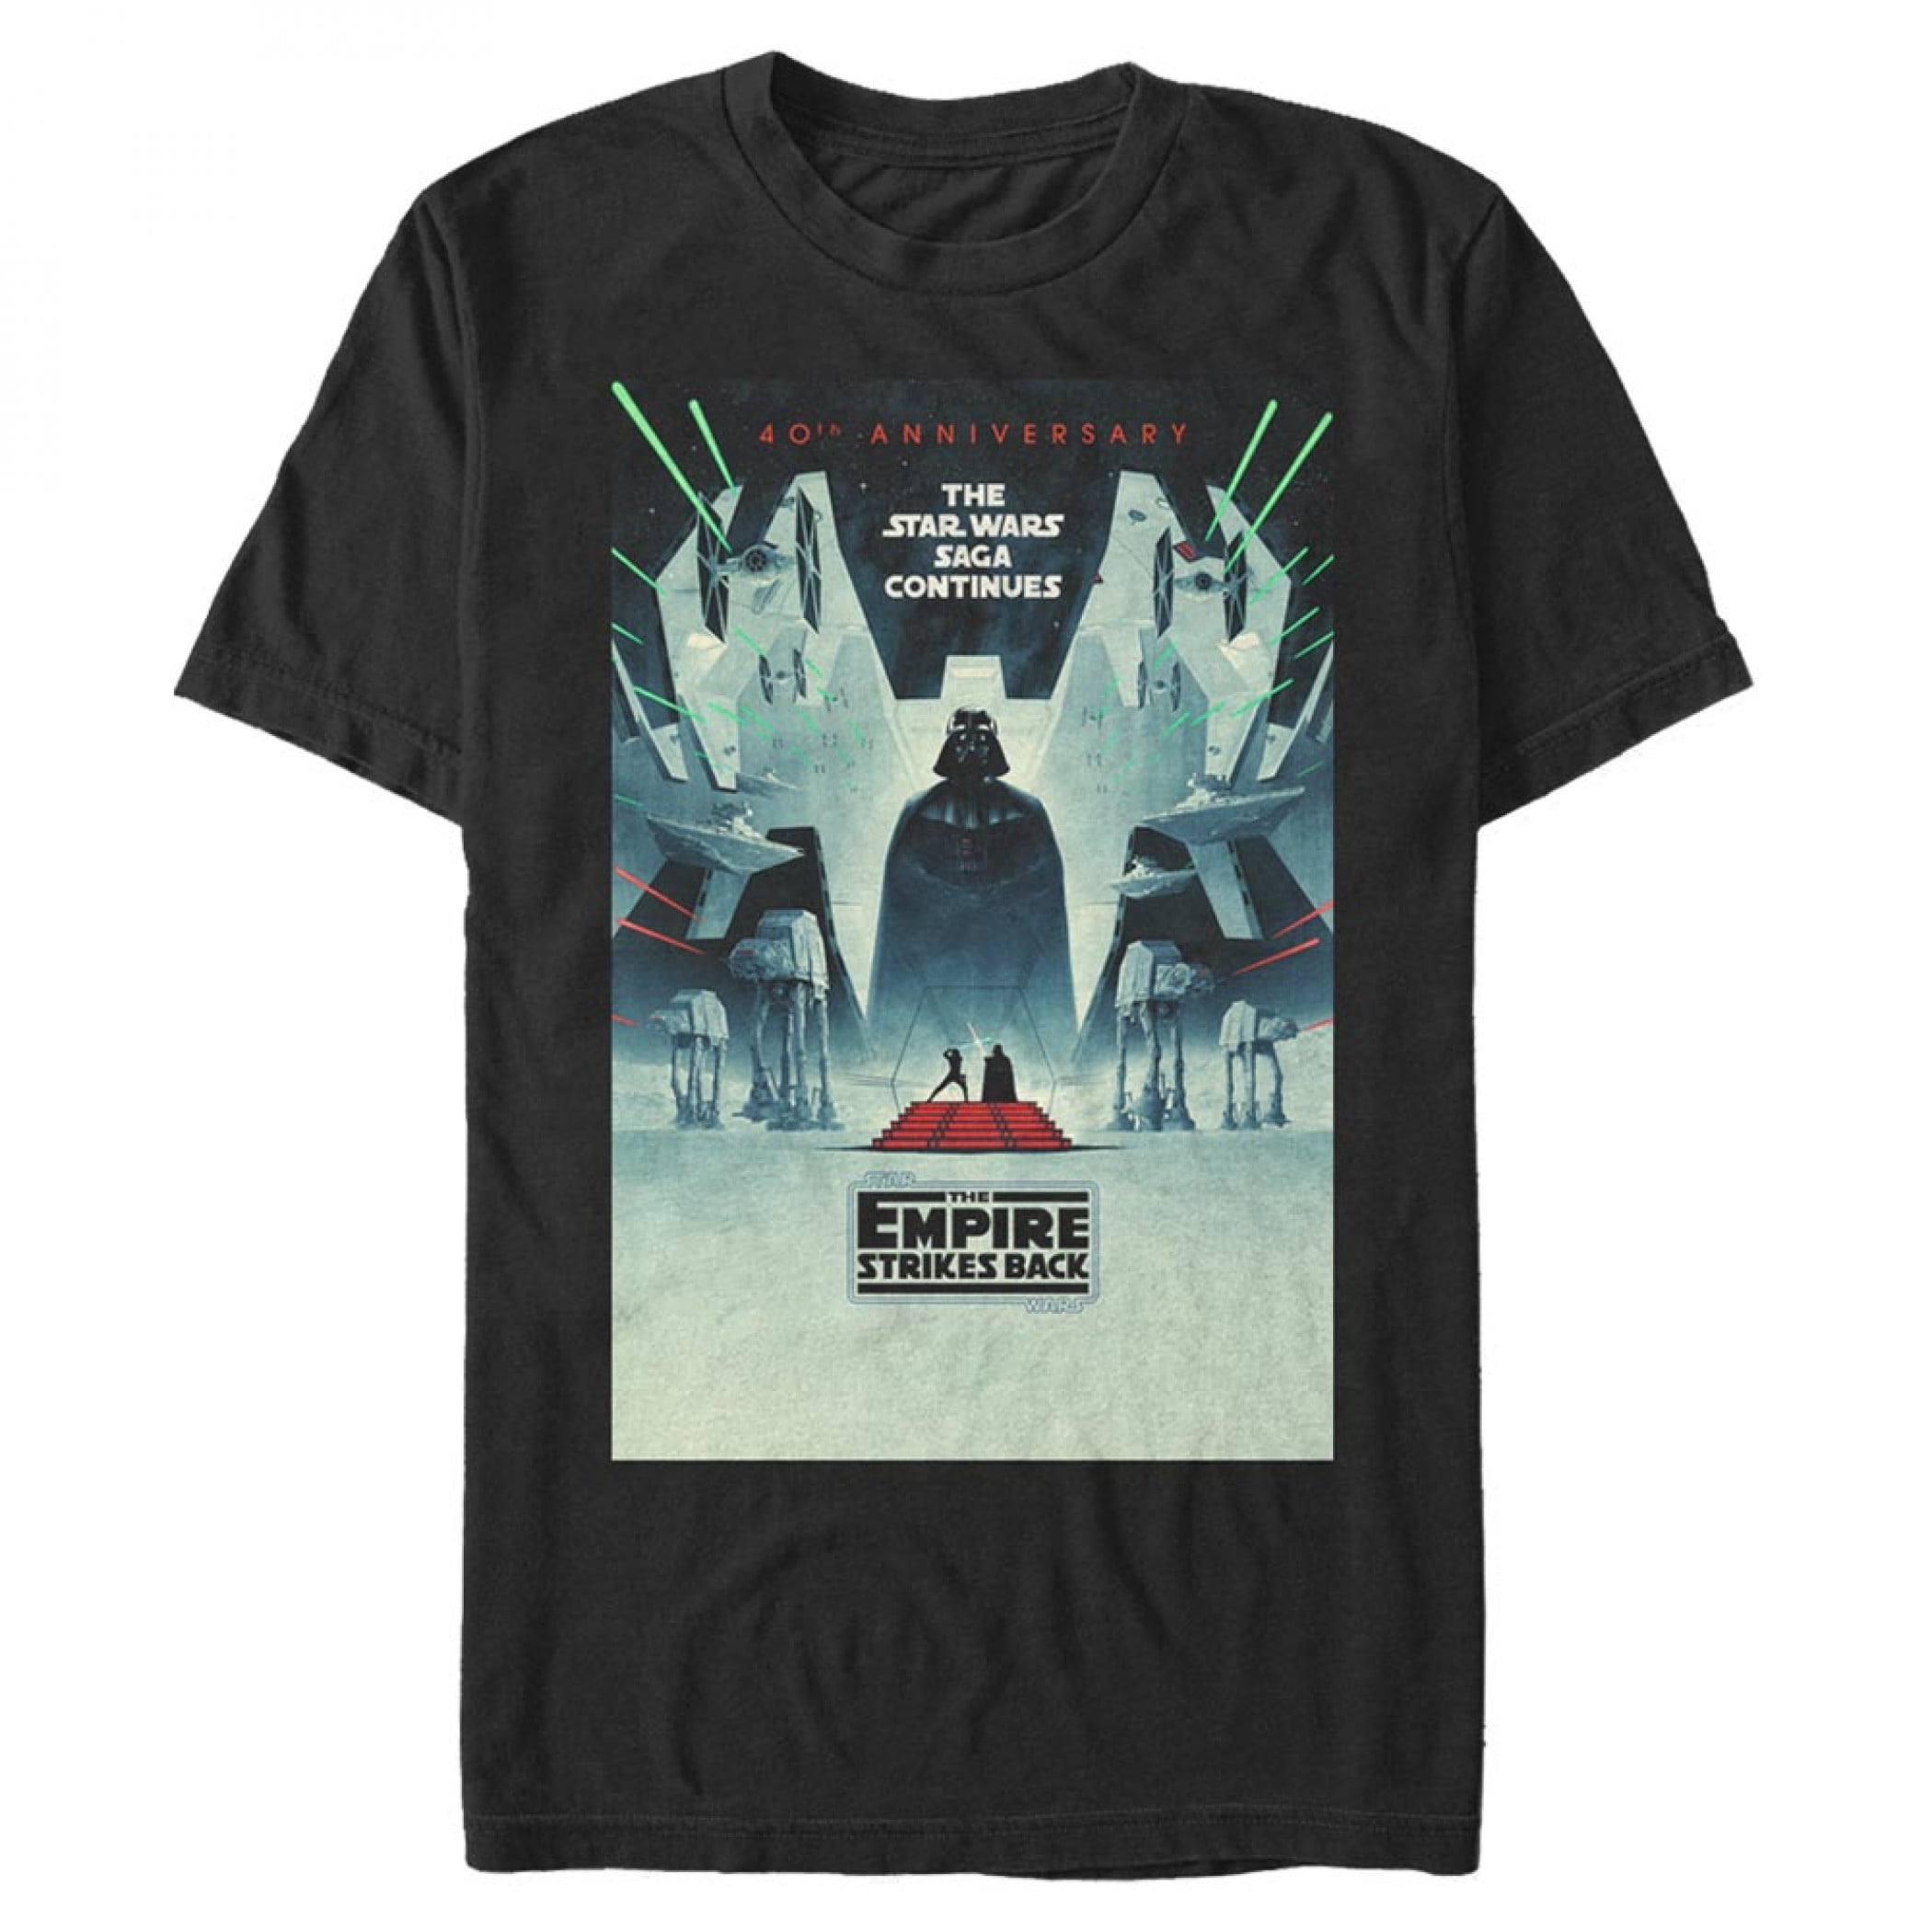 Star Wars The Empire Strikes Back 40th Anniversary Adult T-Shirt Tee M MEDIUM 